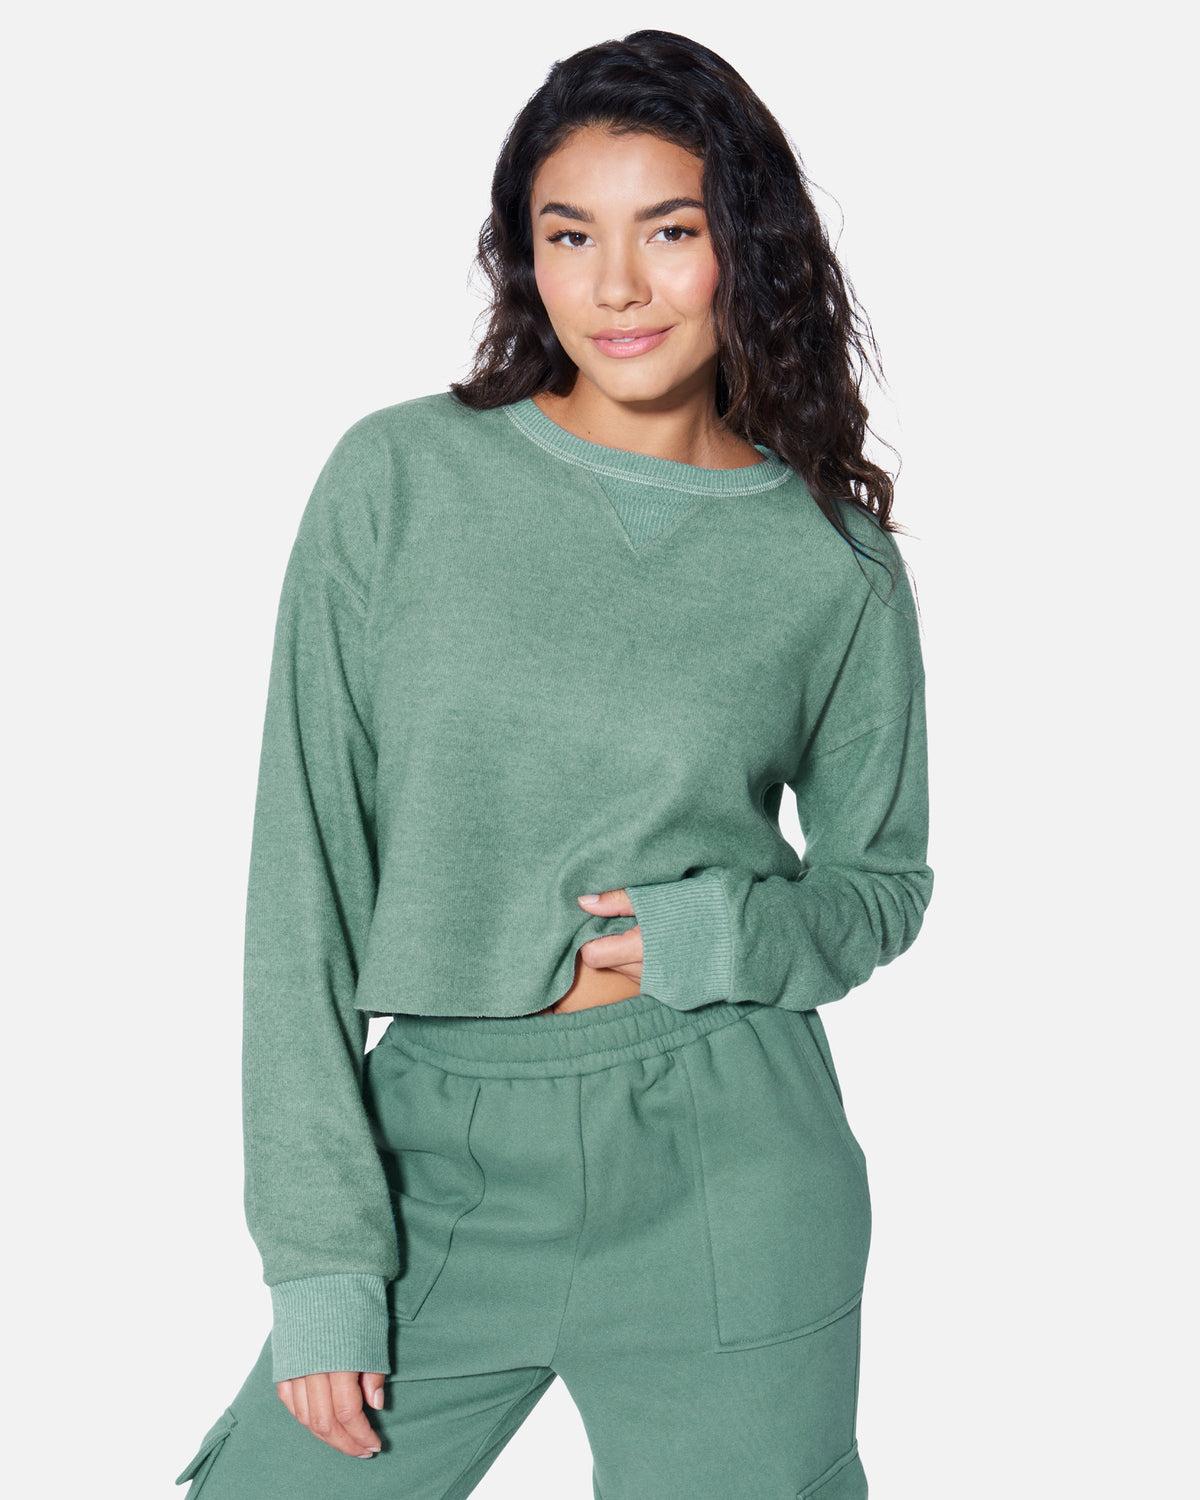 Women's Tops - Shirts, Sweaters | Hurley